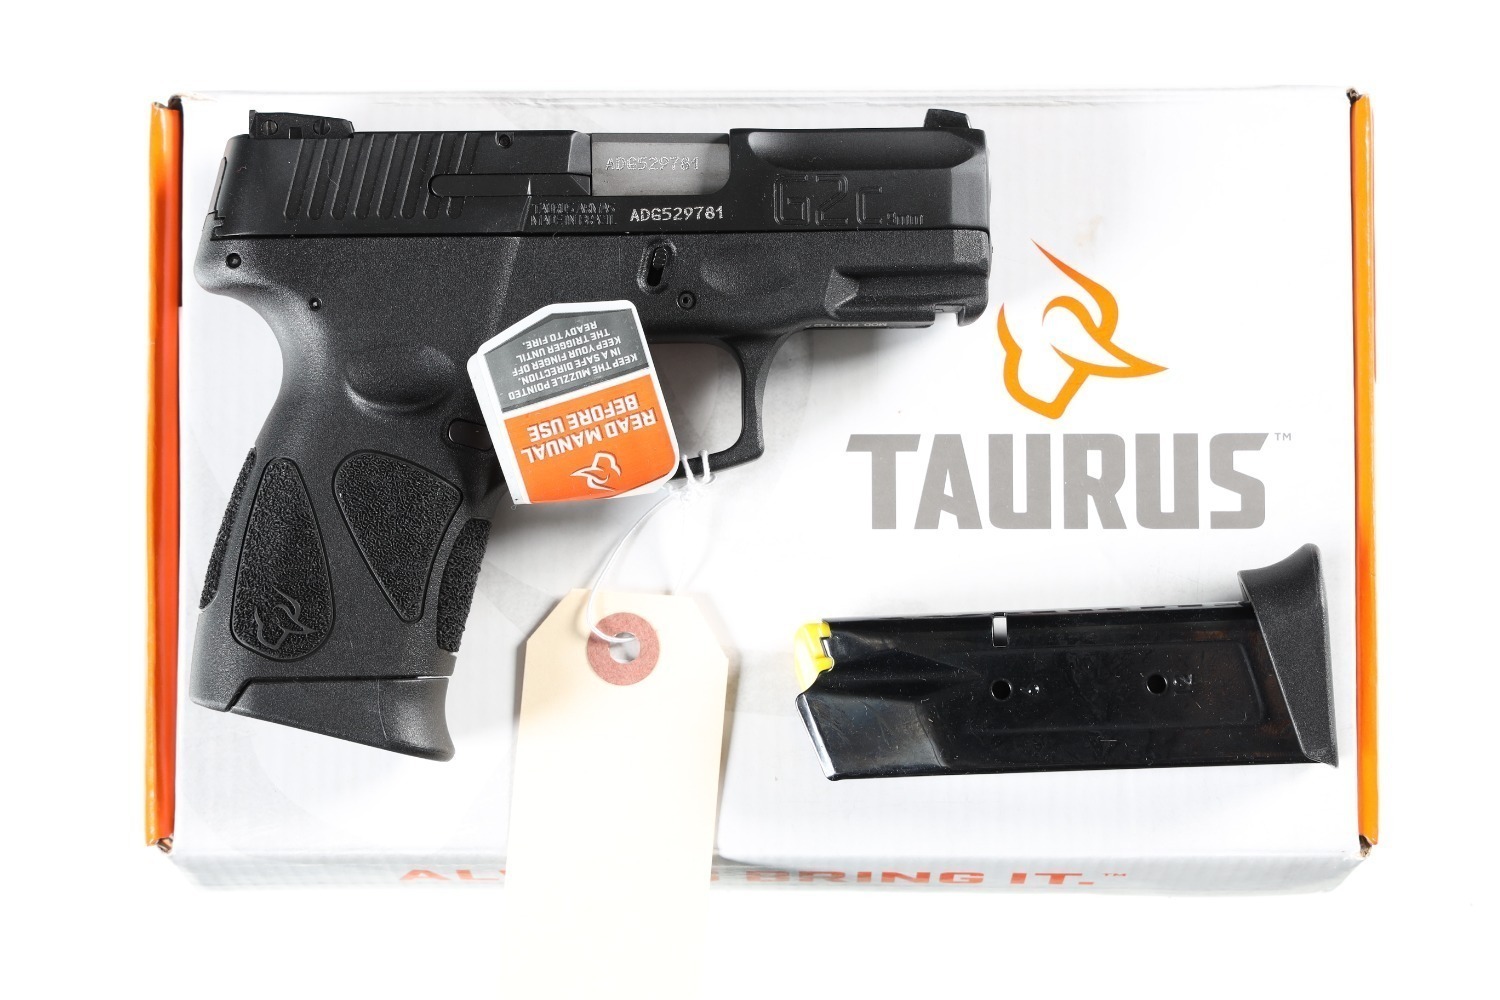 Taurus G2c Pistol 9mm